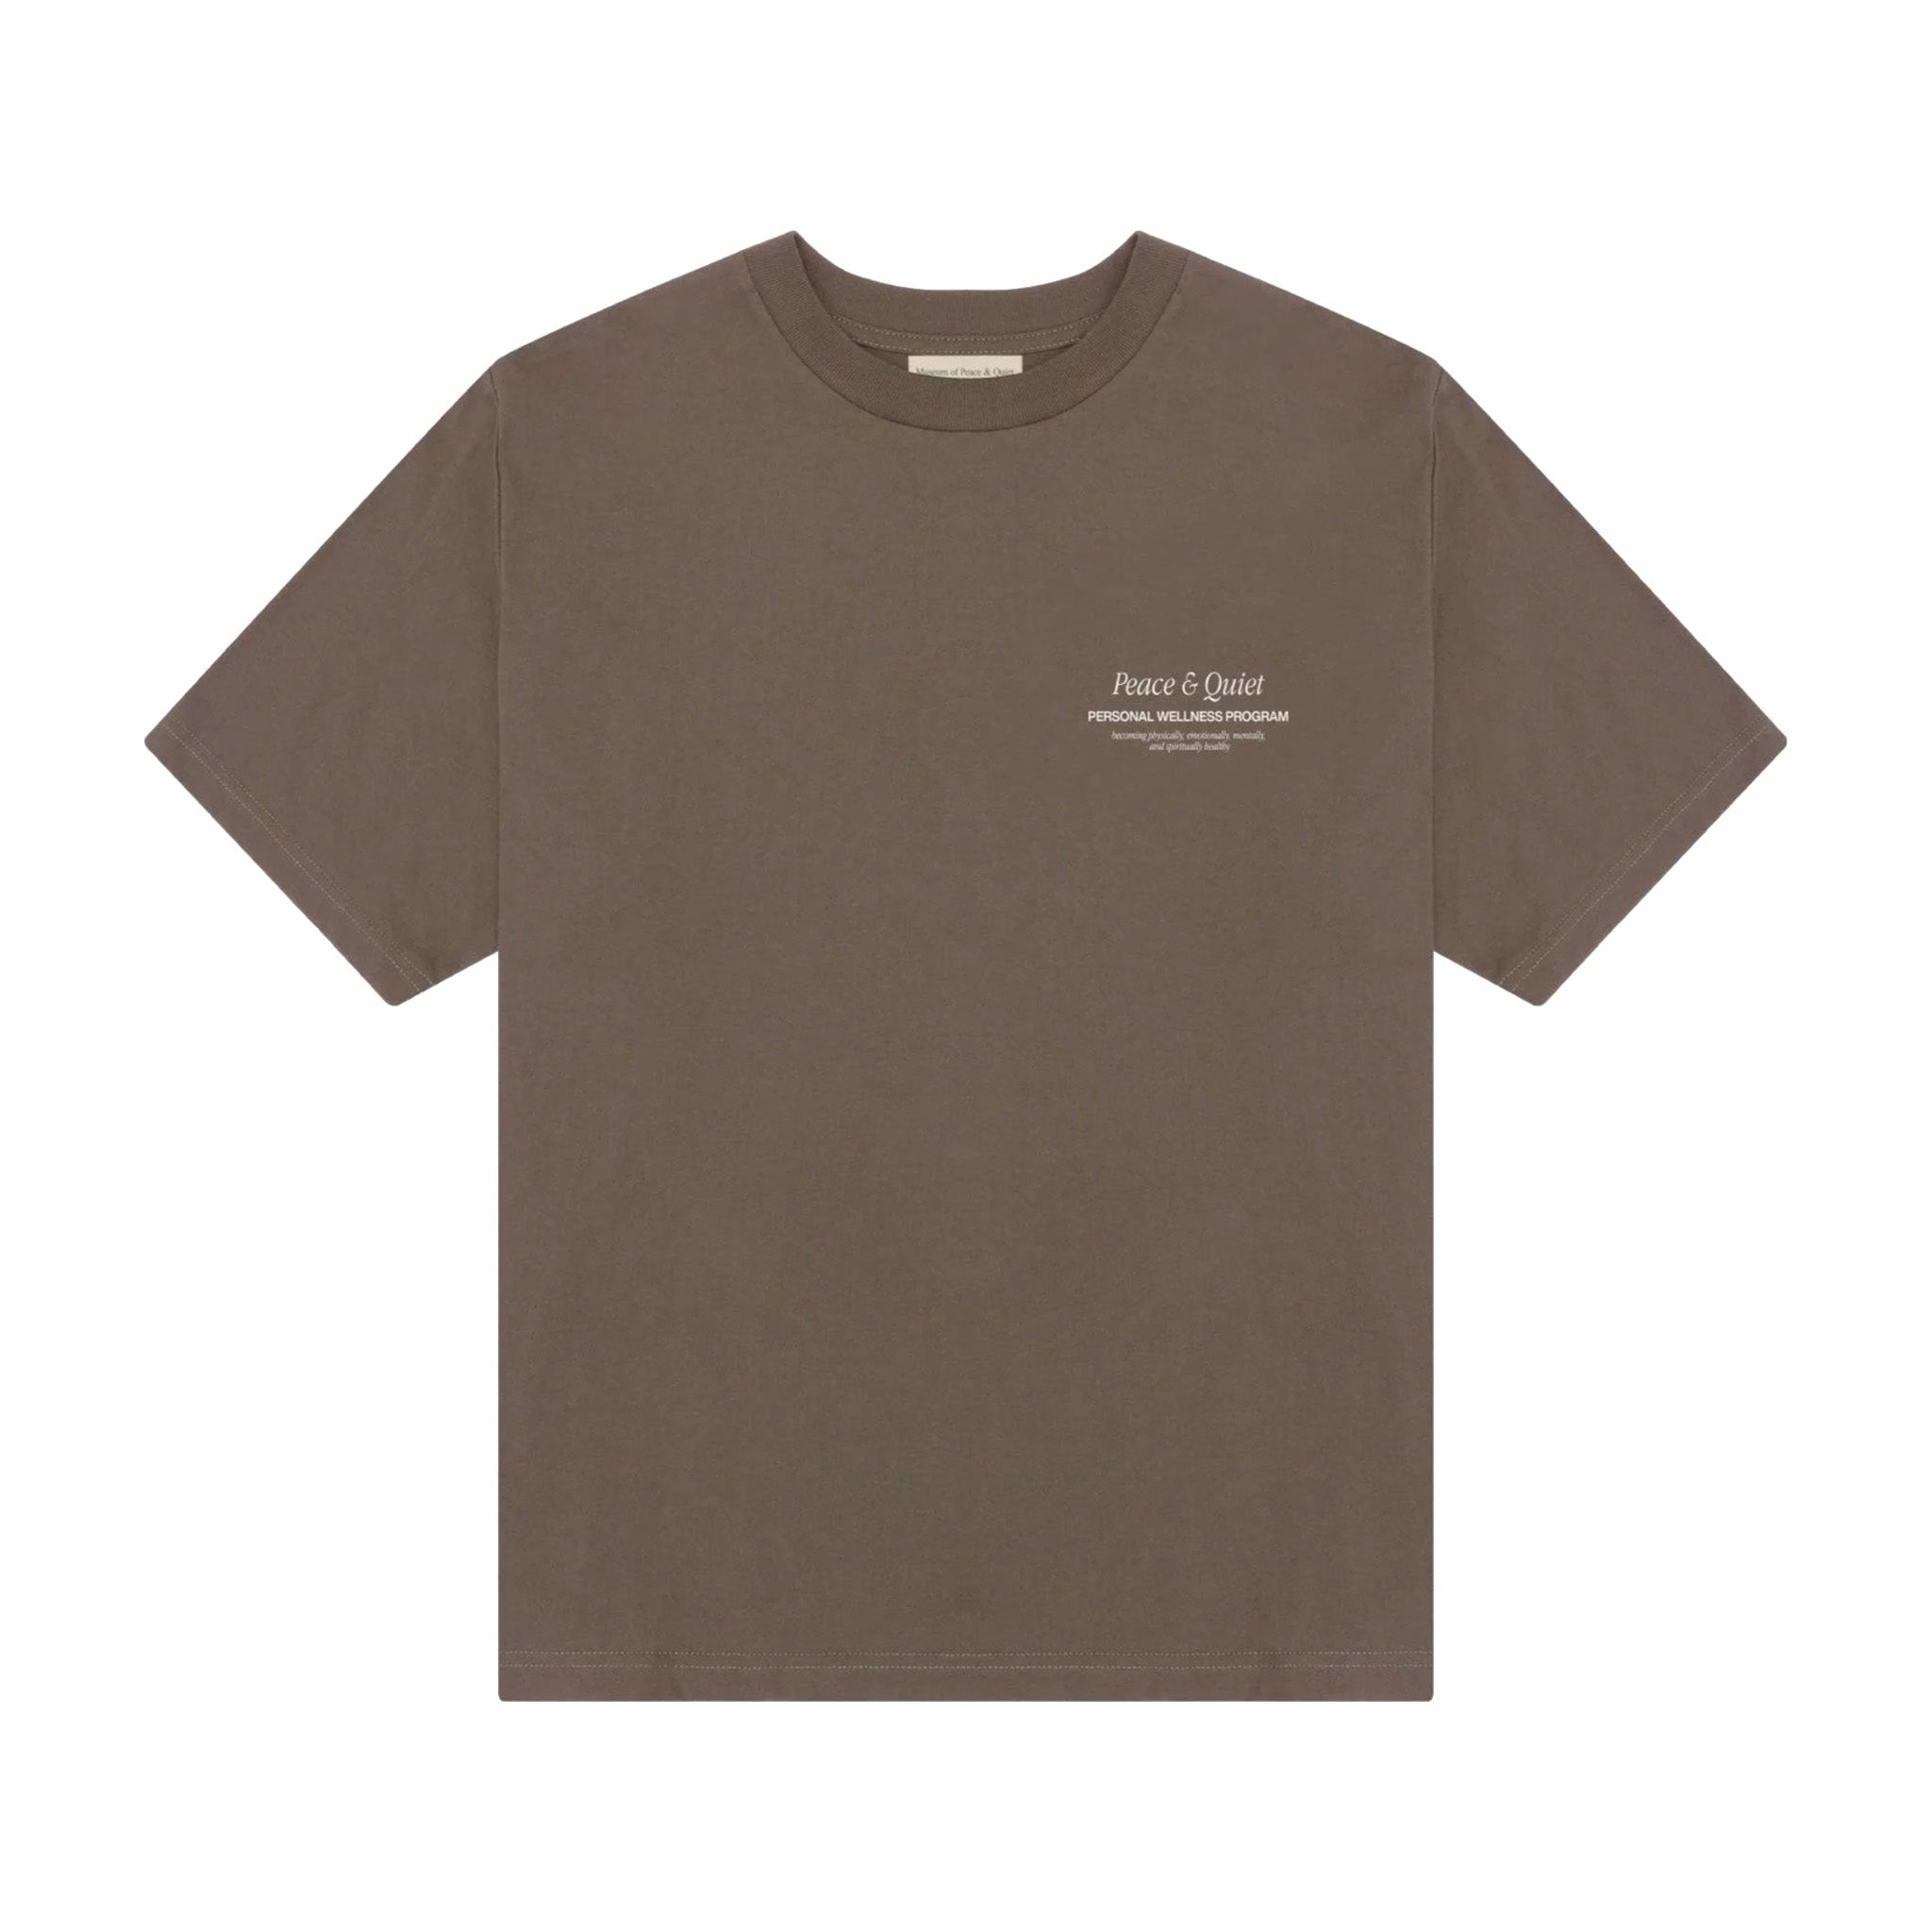 Museum of Peace &amp; Quiet Wellness Program T-Shirt (Clay) - August Shop